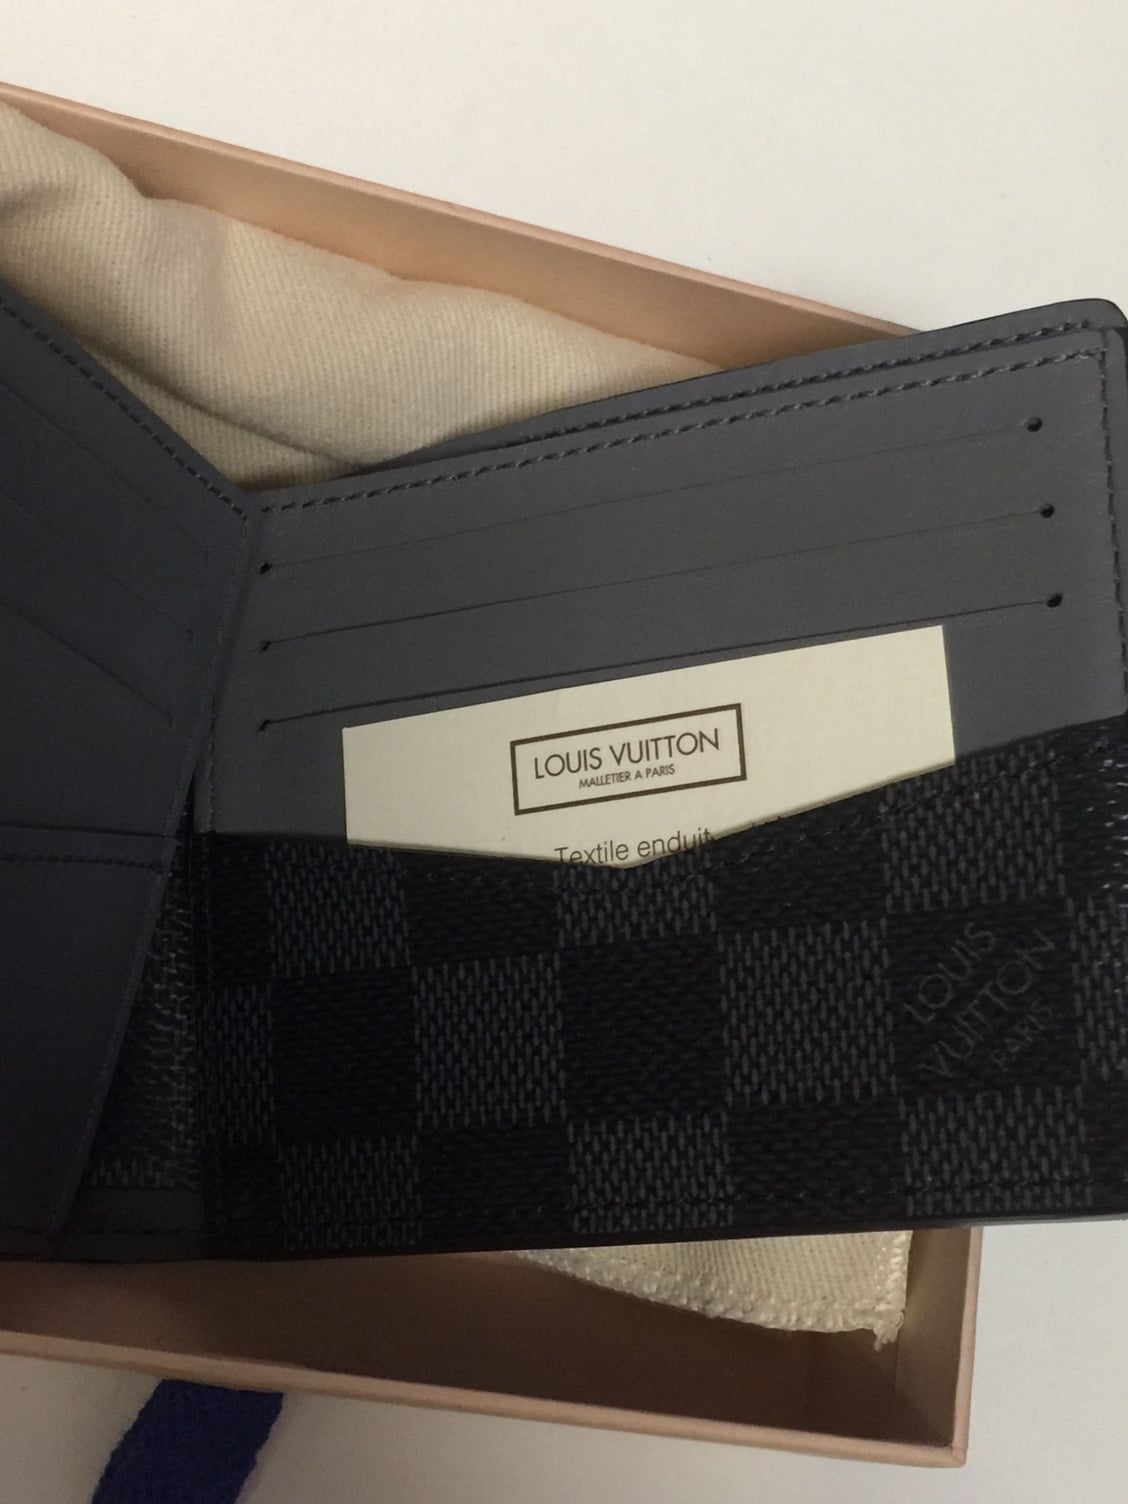 FS: New Mens Louis Vuitton Damier Graphite Wallet with receipt